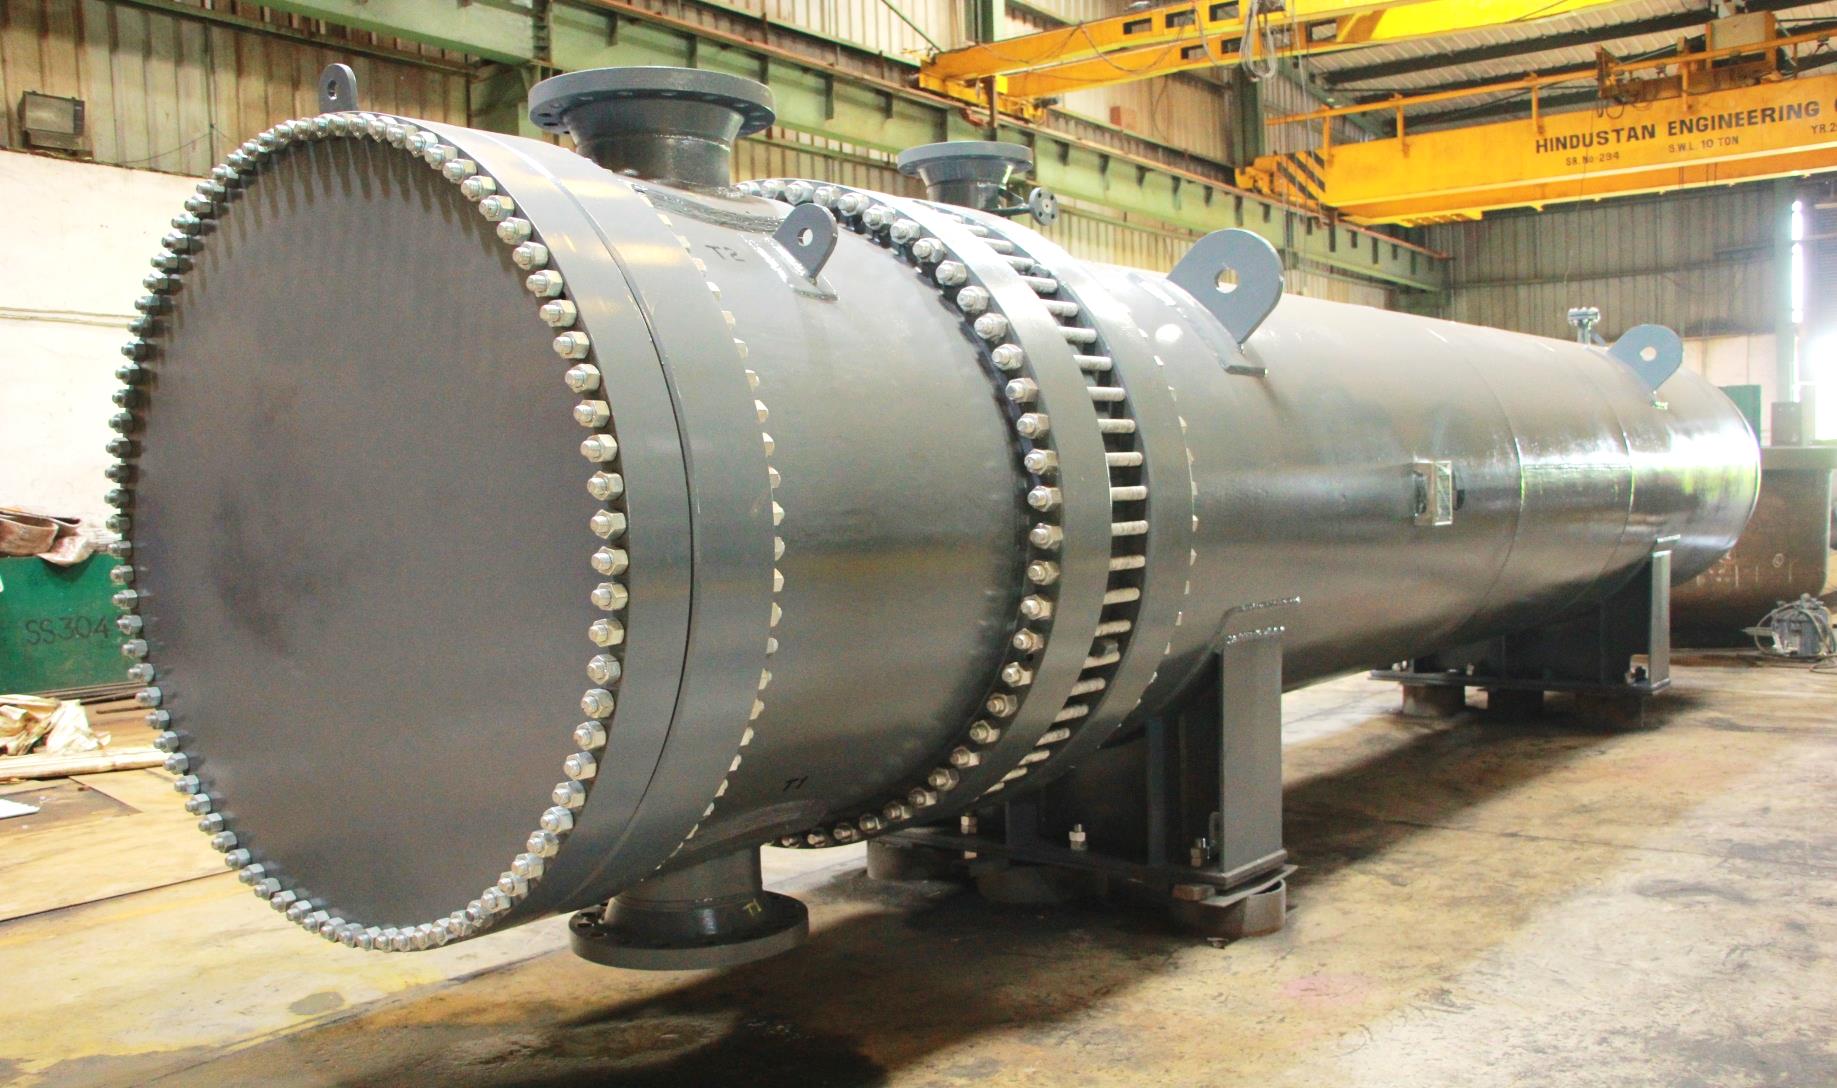 U Tube Type Shell Tube Heat Exchanger Kinam Engineering Industries